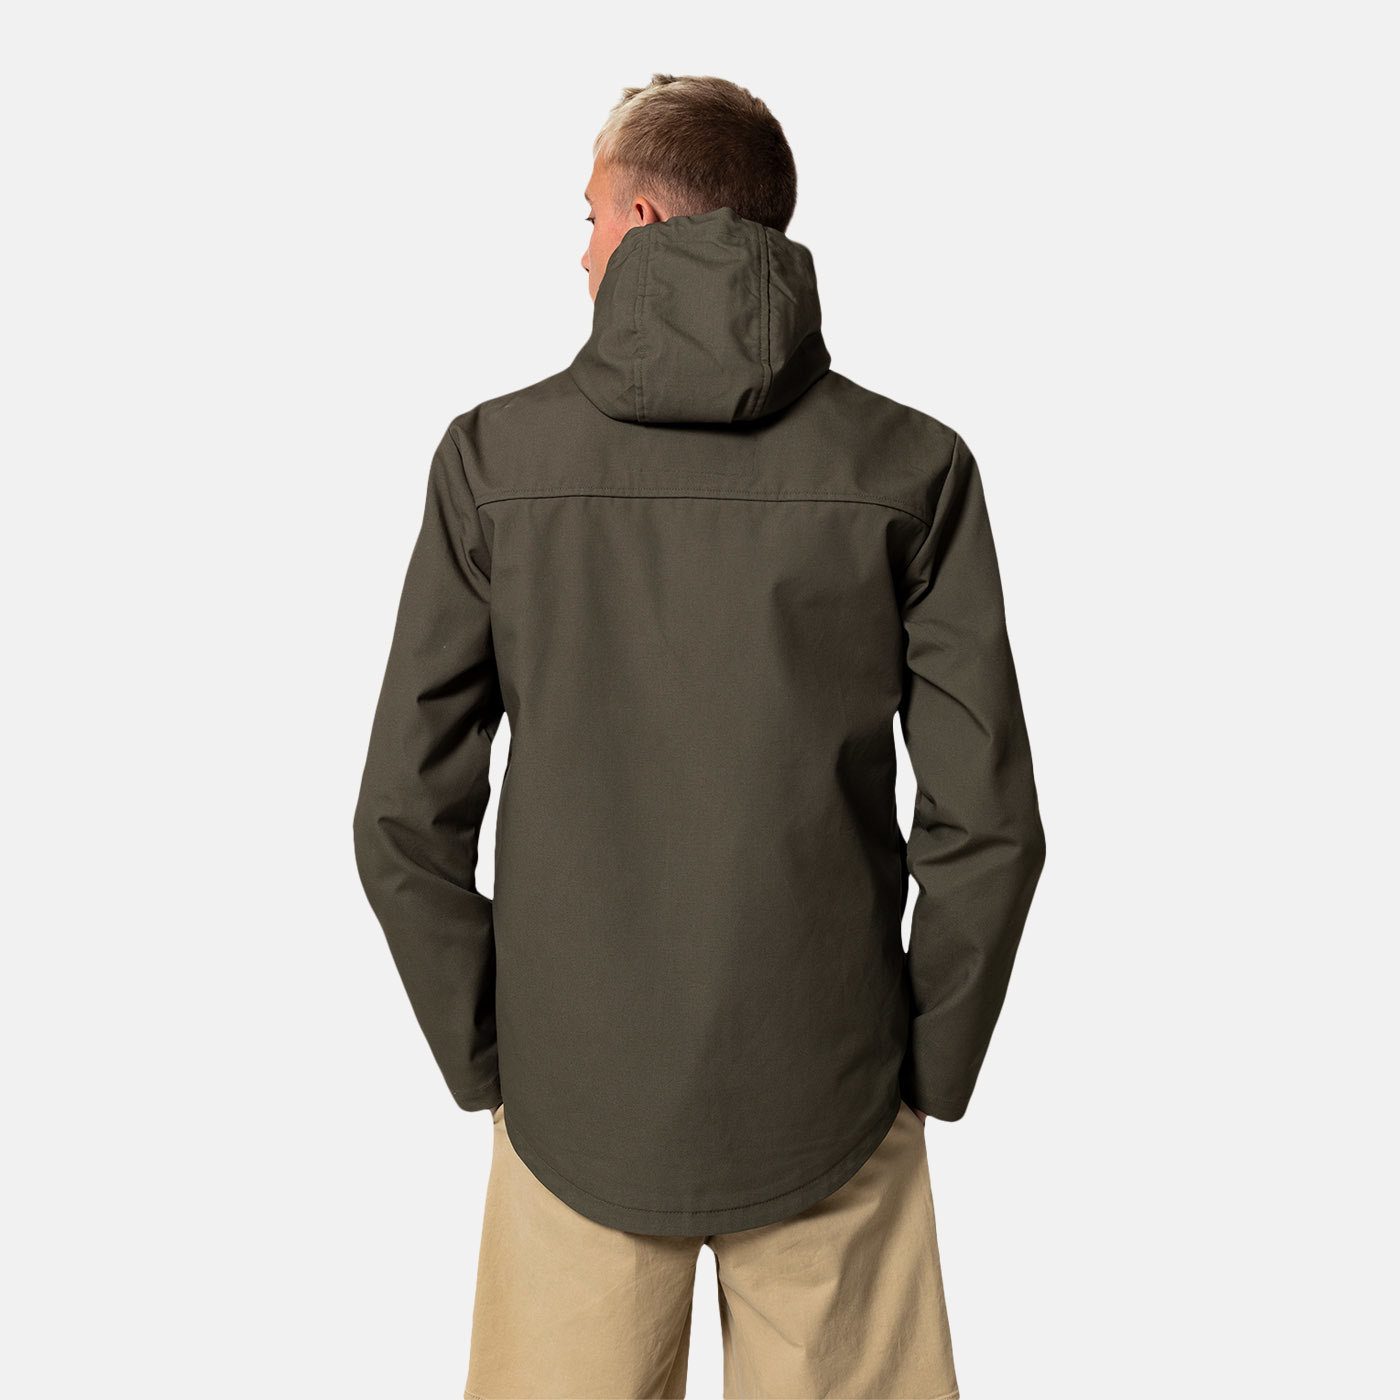 RVLT RVLT, 7351 X Hooded Jacket, army, M